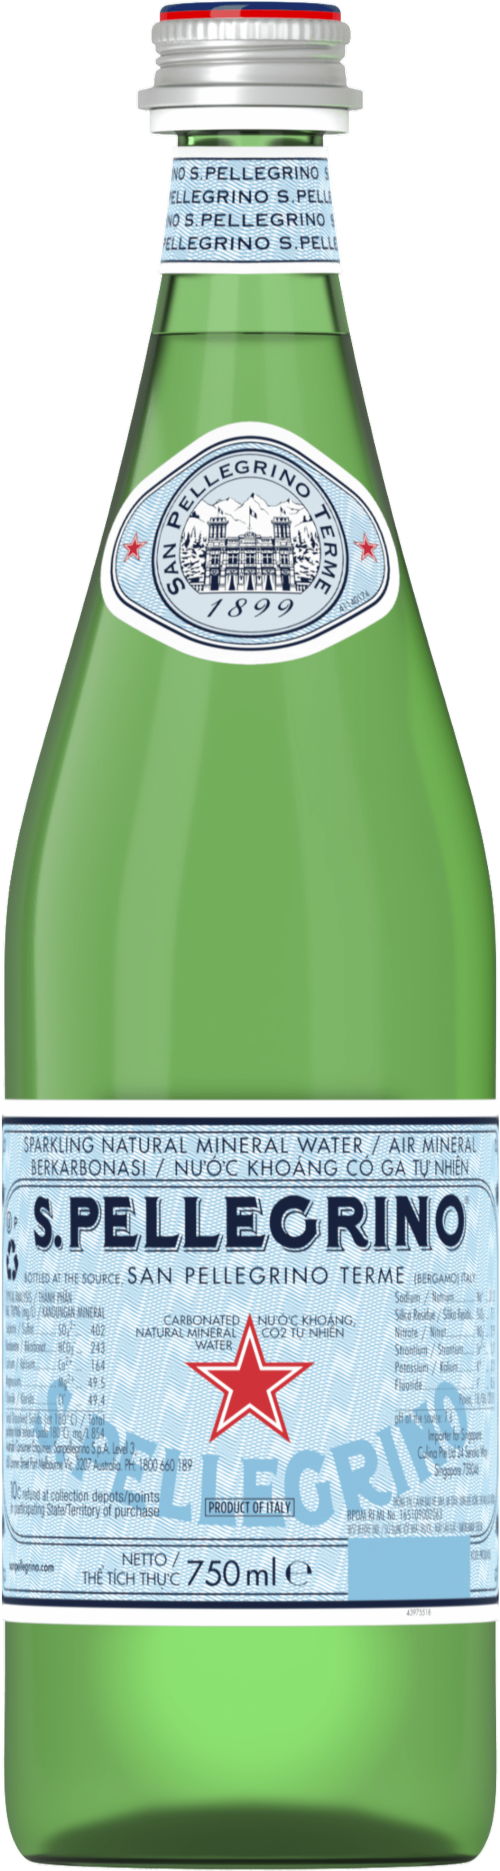 SAN PELLEGRINO Sparkling Natural Mineral Water 750ml